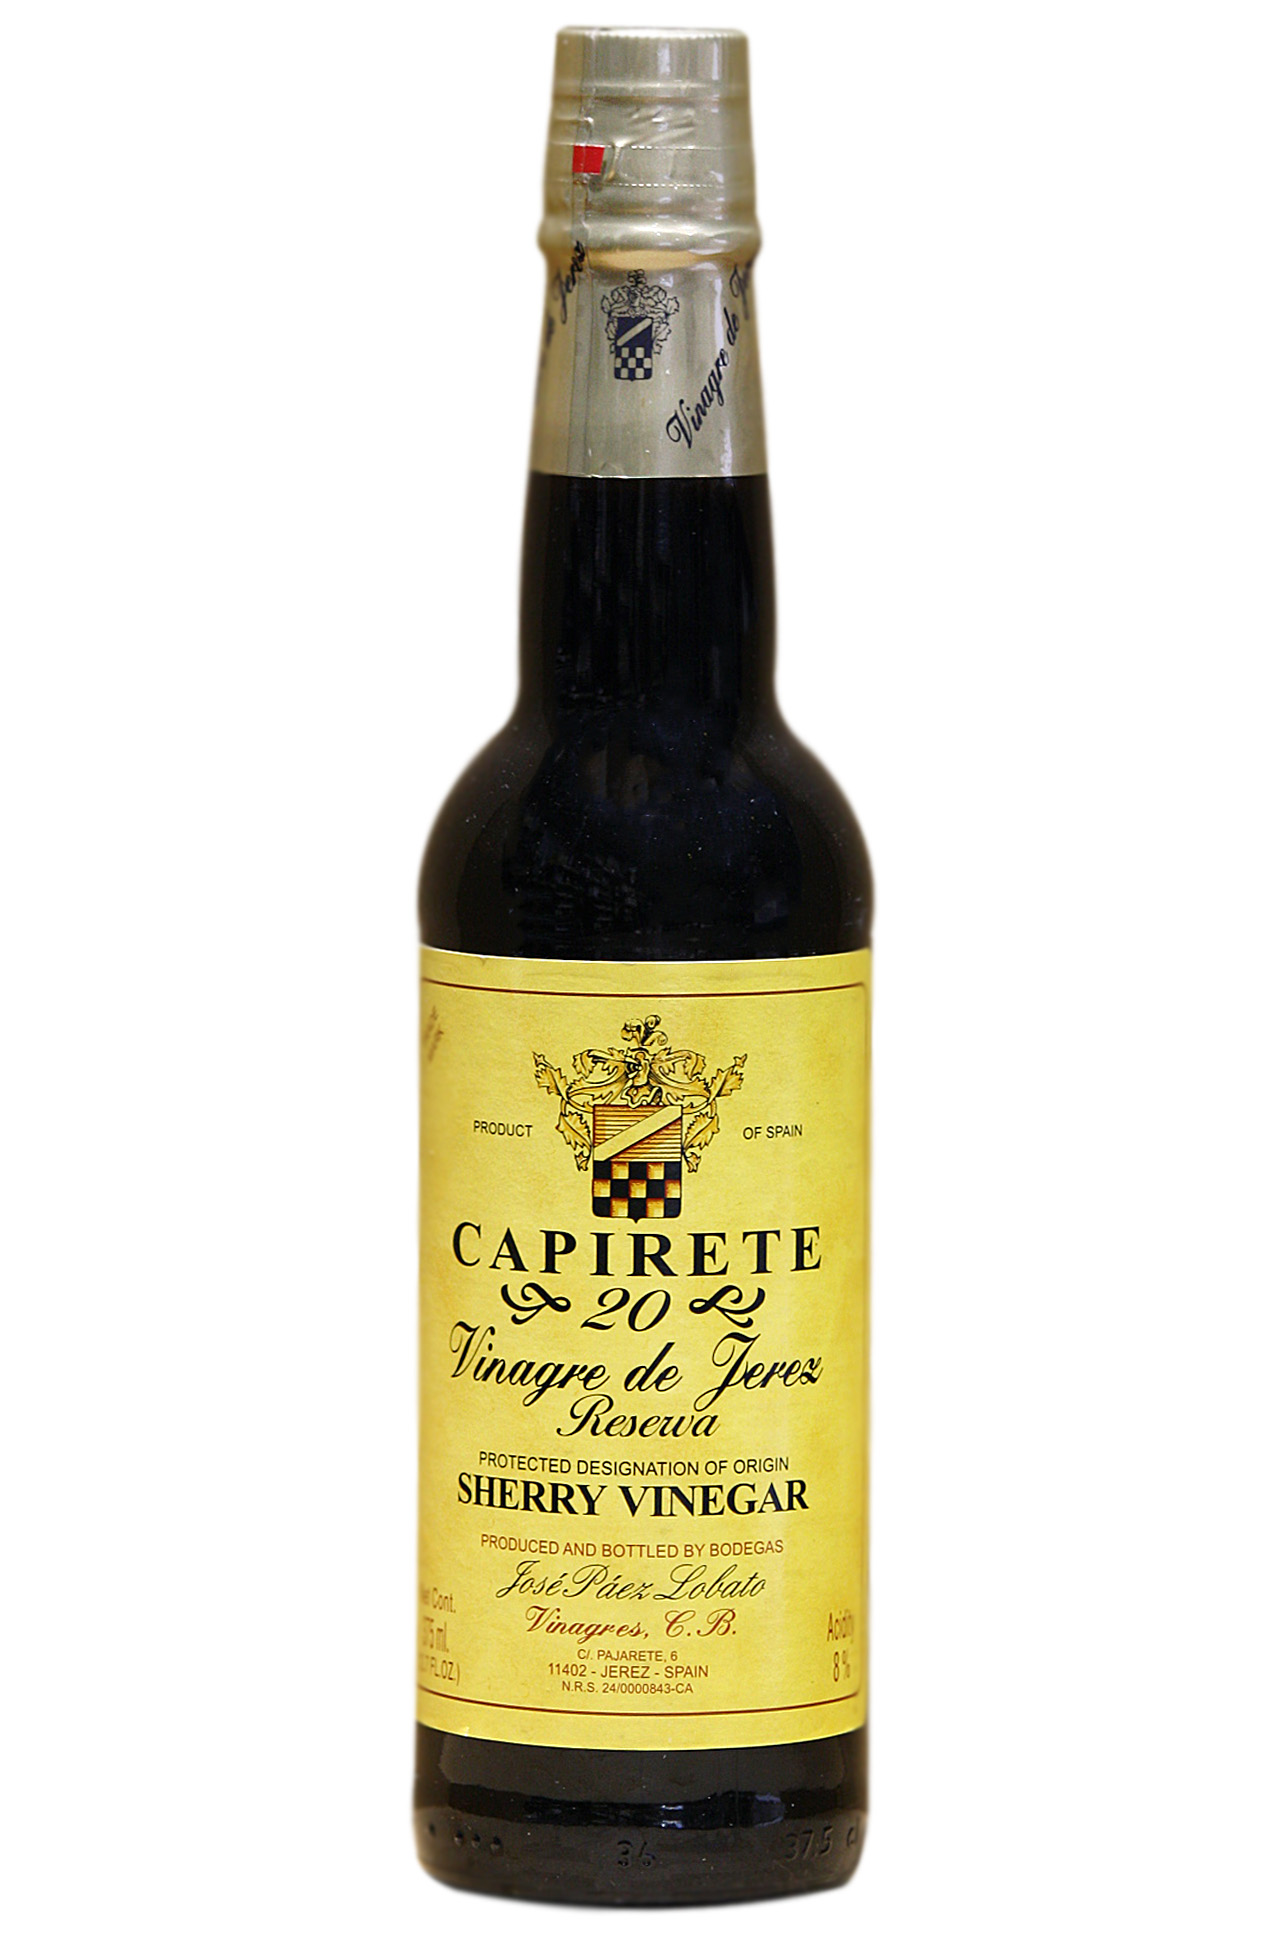 Capirete AV52-Xerez Vinegar 20 years